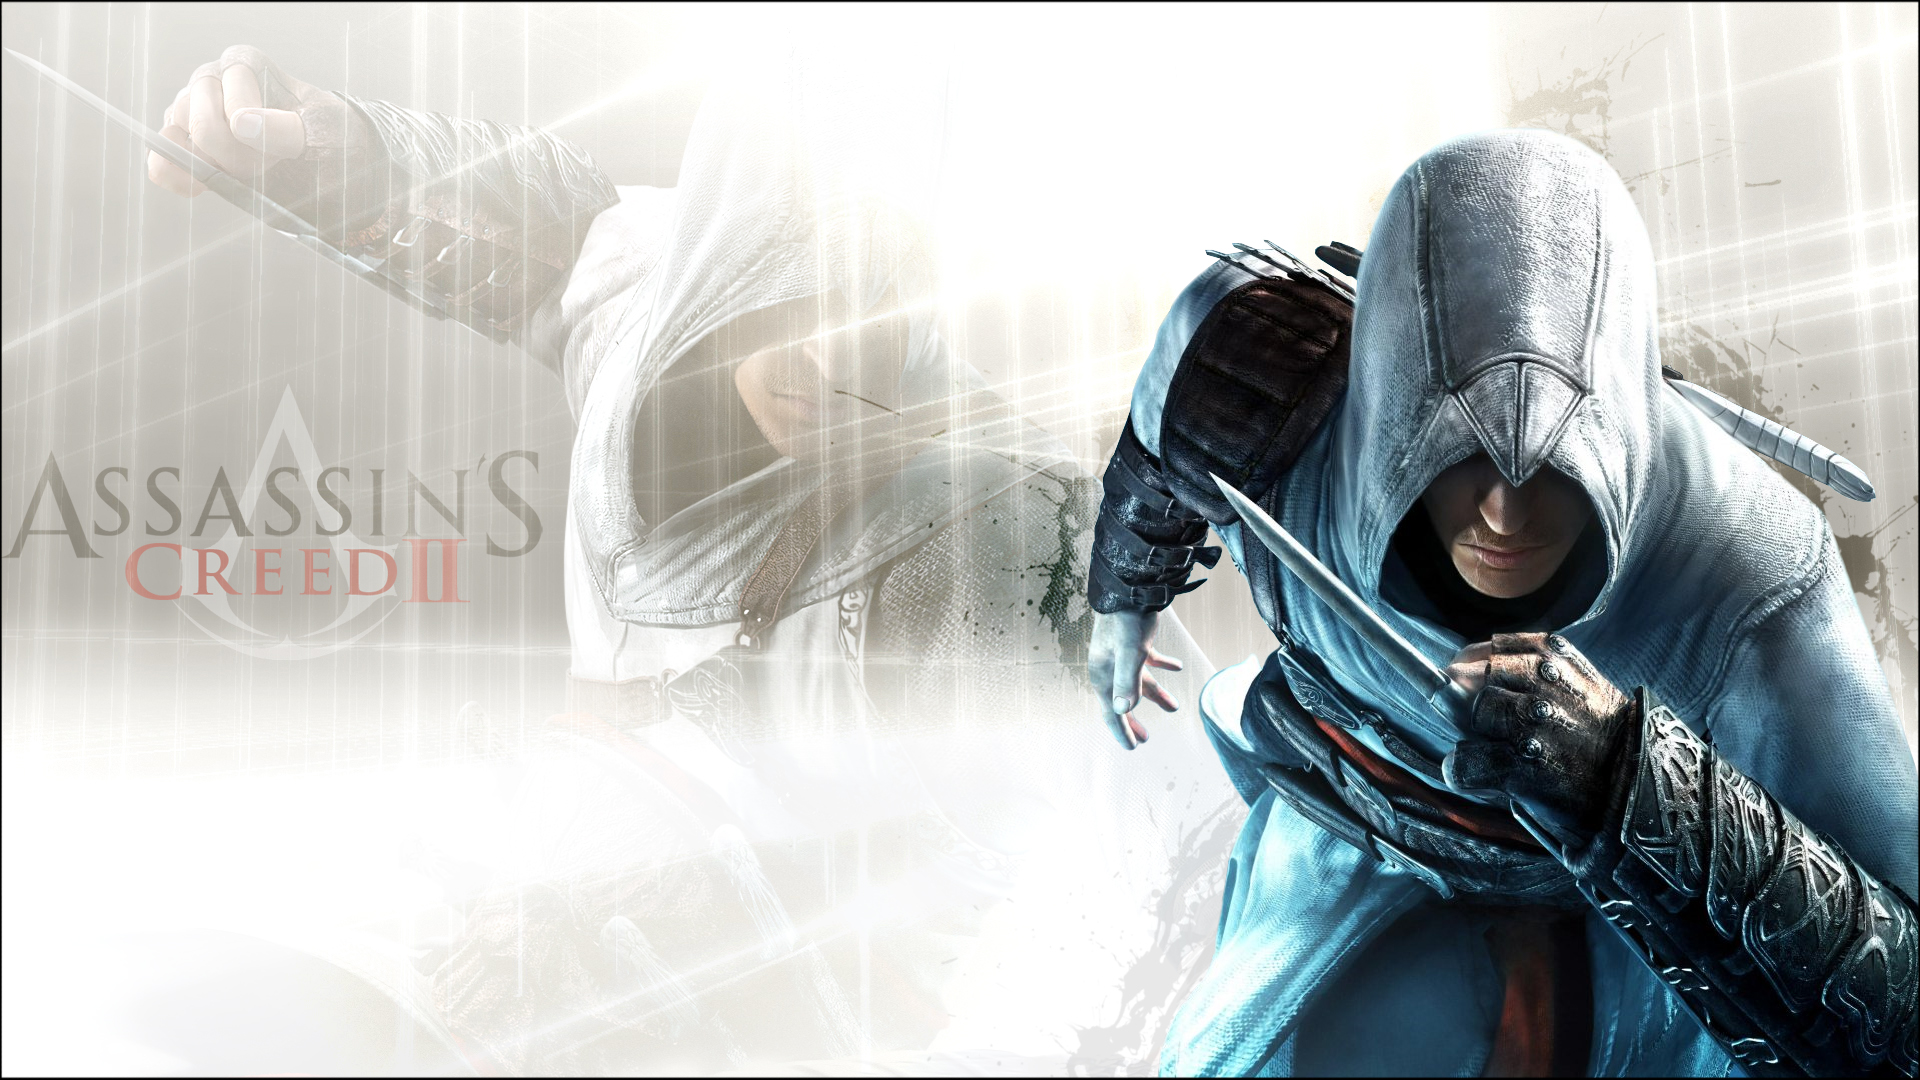 Assassins Creed 2 Wallpaper by stiannius on DeviantArt